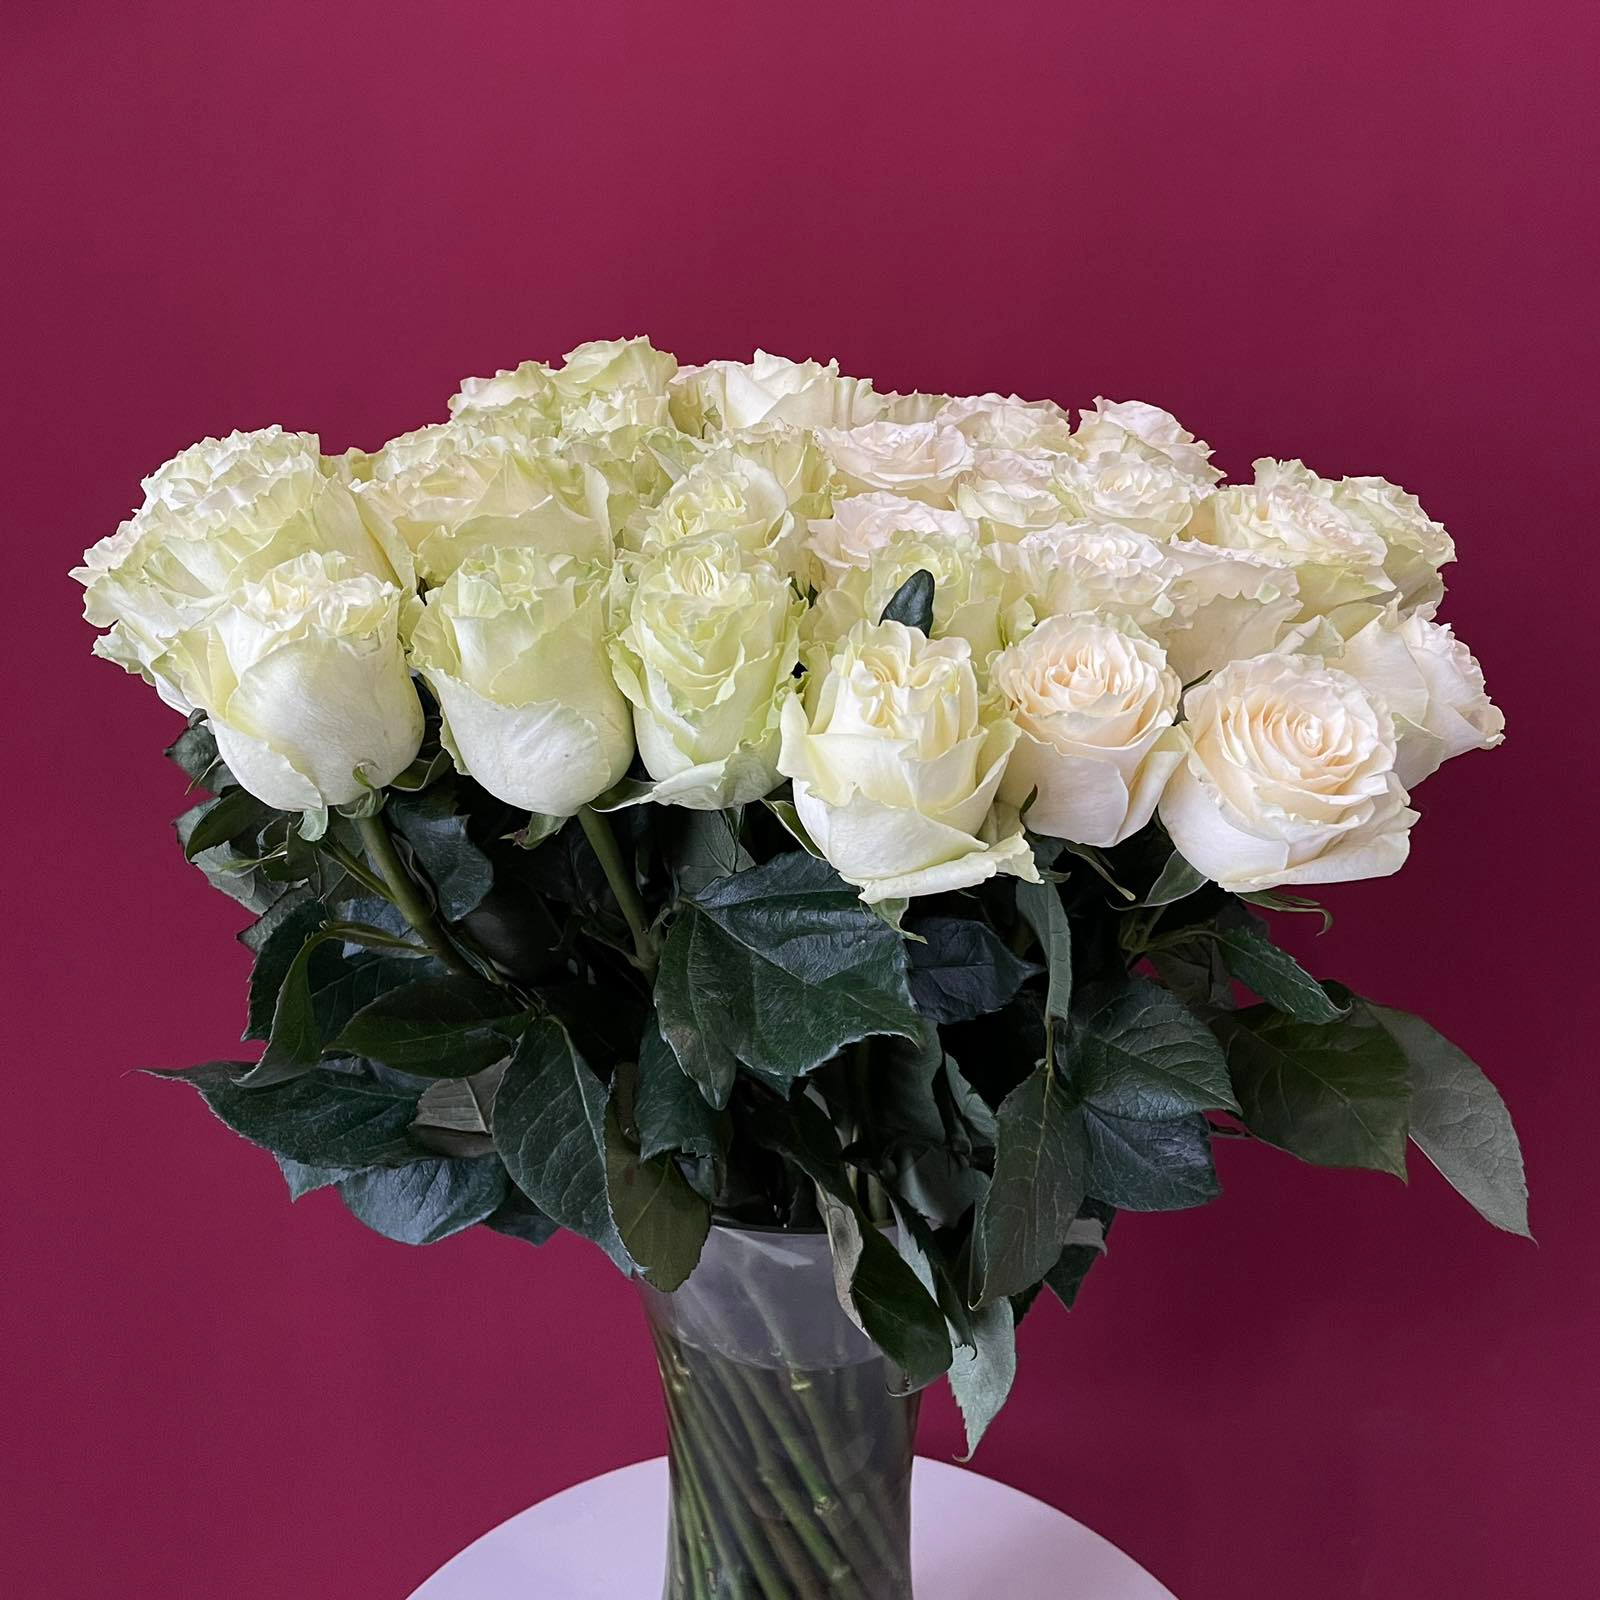 Белая роза 60 см